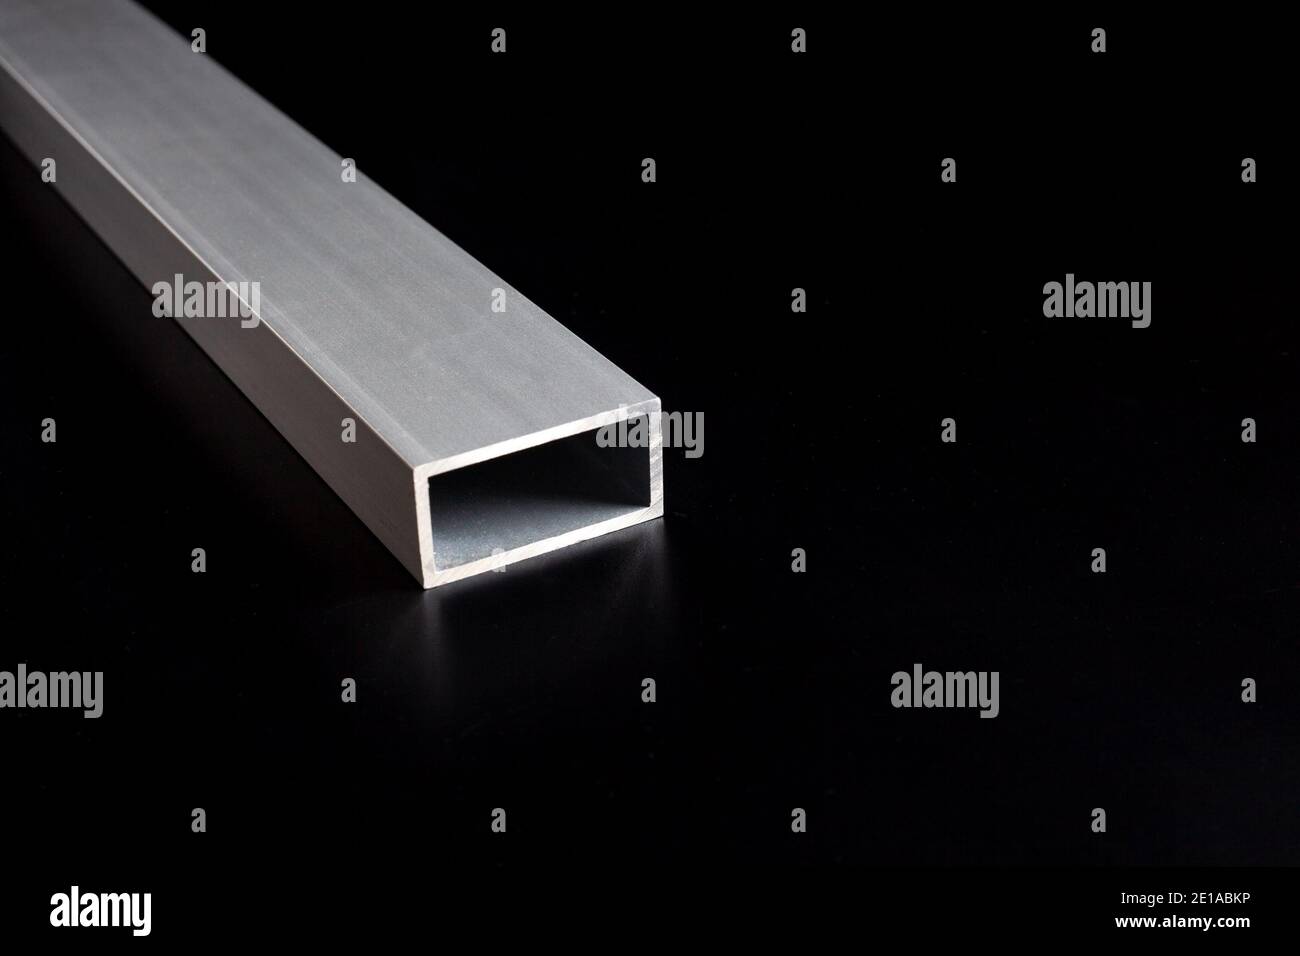 Photo of aluminium steel tube profile for windows and doors manufacturing. Aluminium constructions on dark surface background. Stock Photo